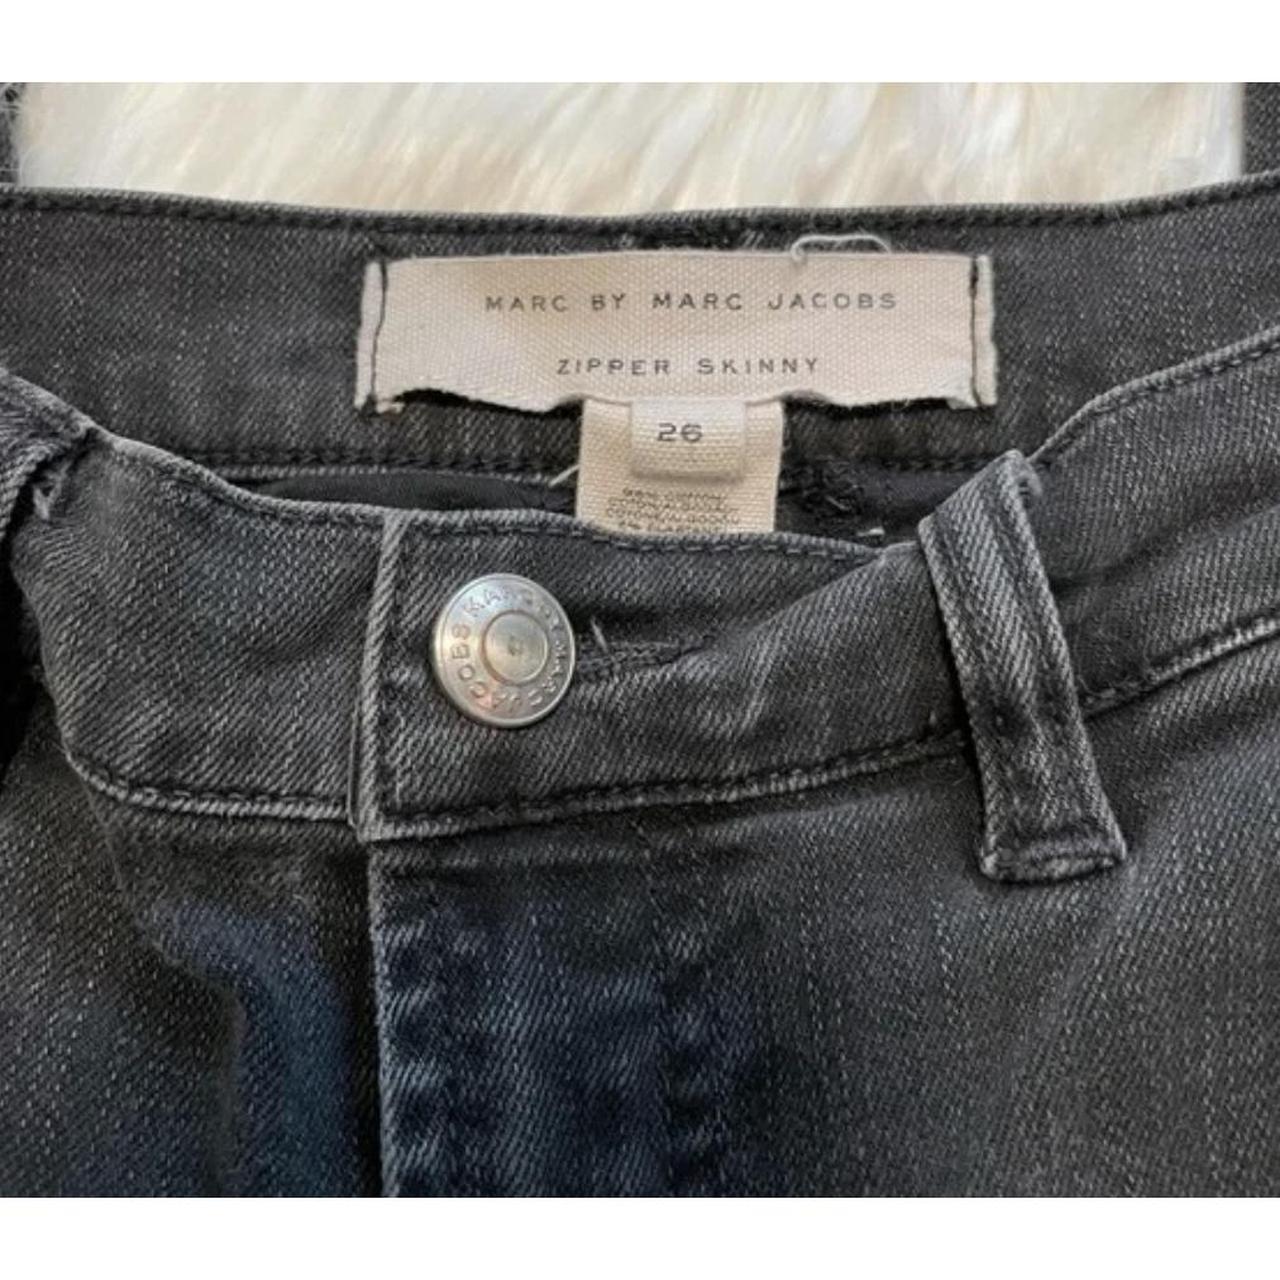 Marc Jacobs Zipper Skinny Jeans Black Faded Wash...